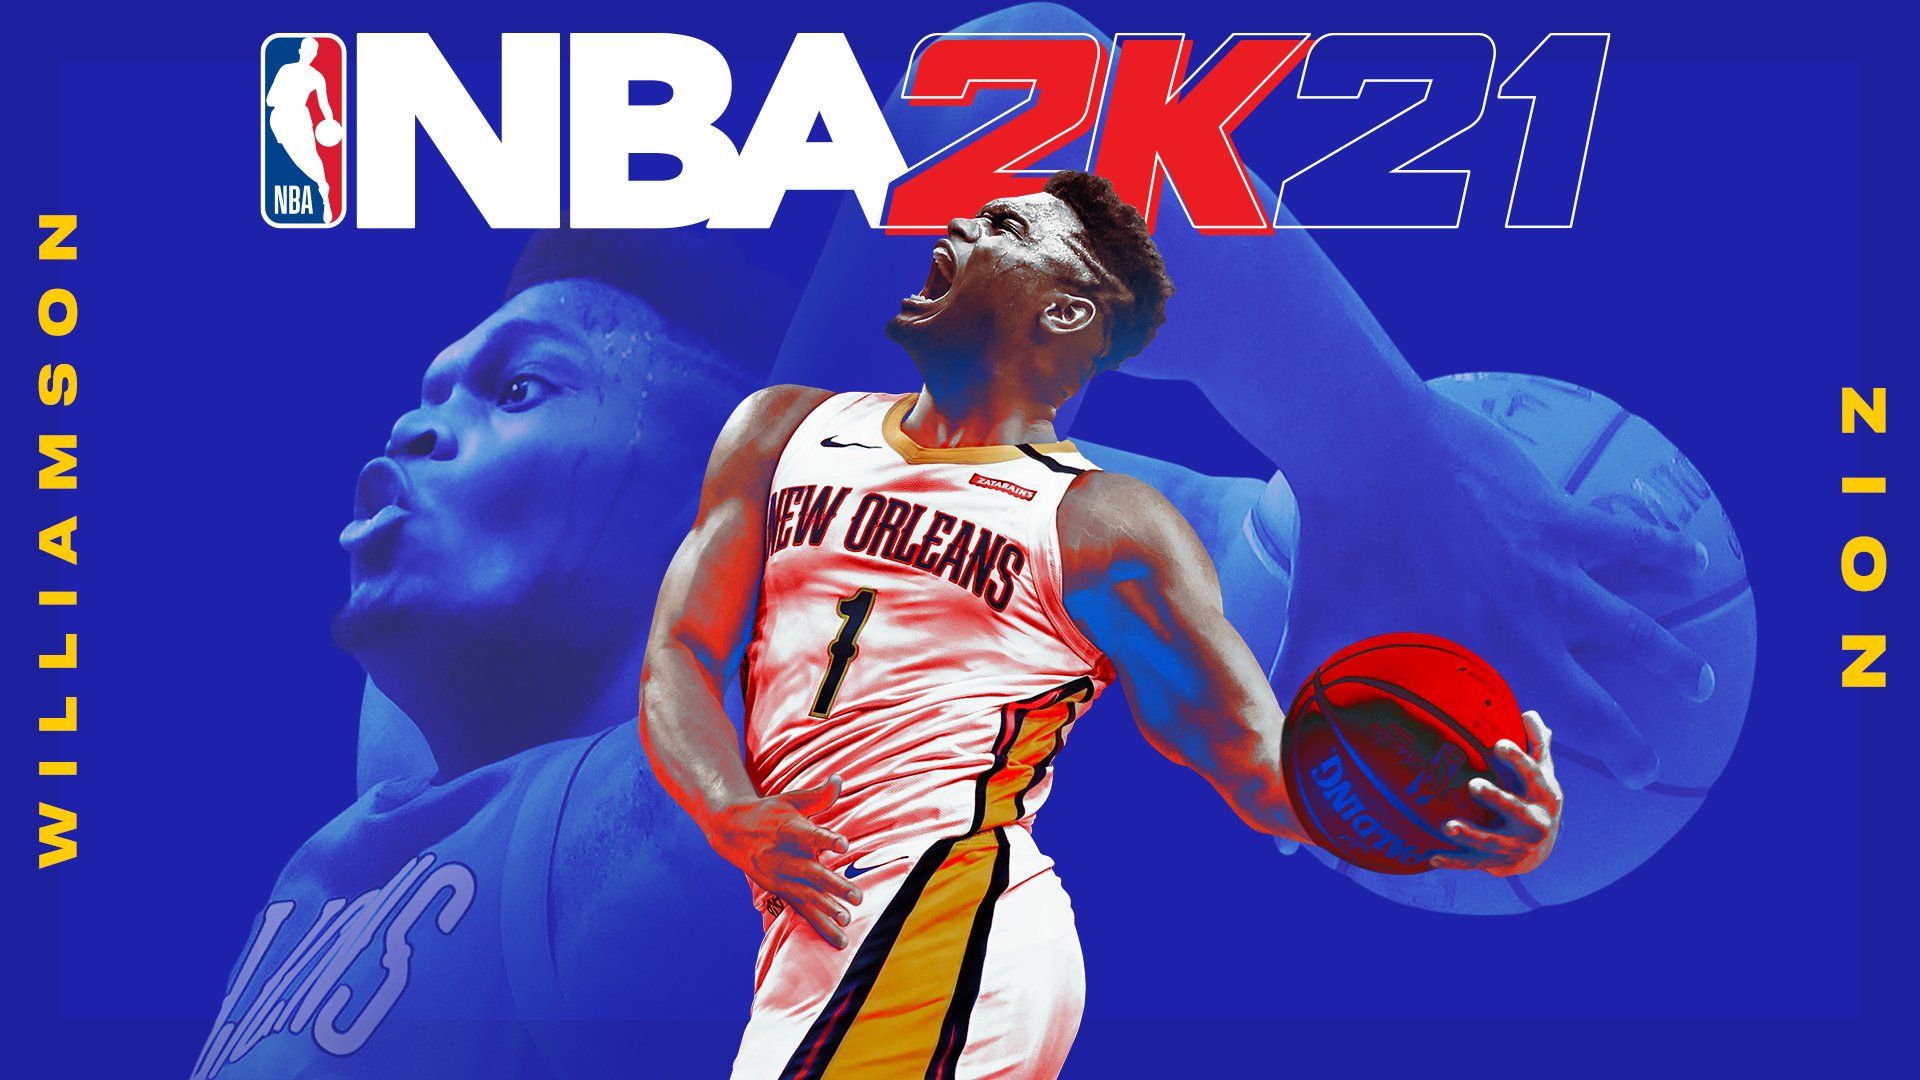 All NBA 2K21 Locker codes (July 2021)